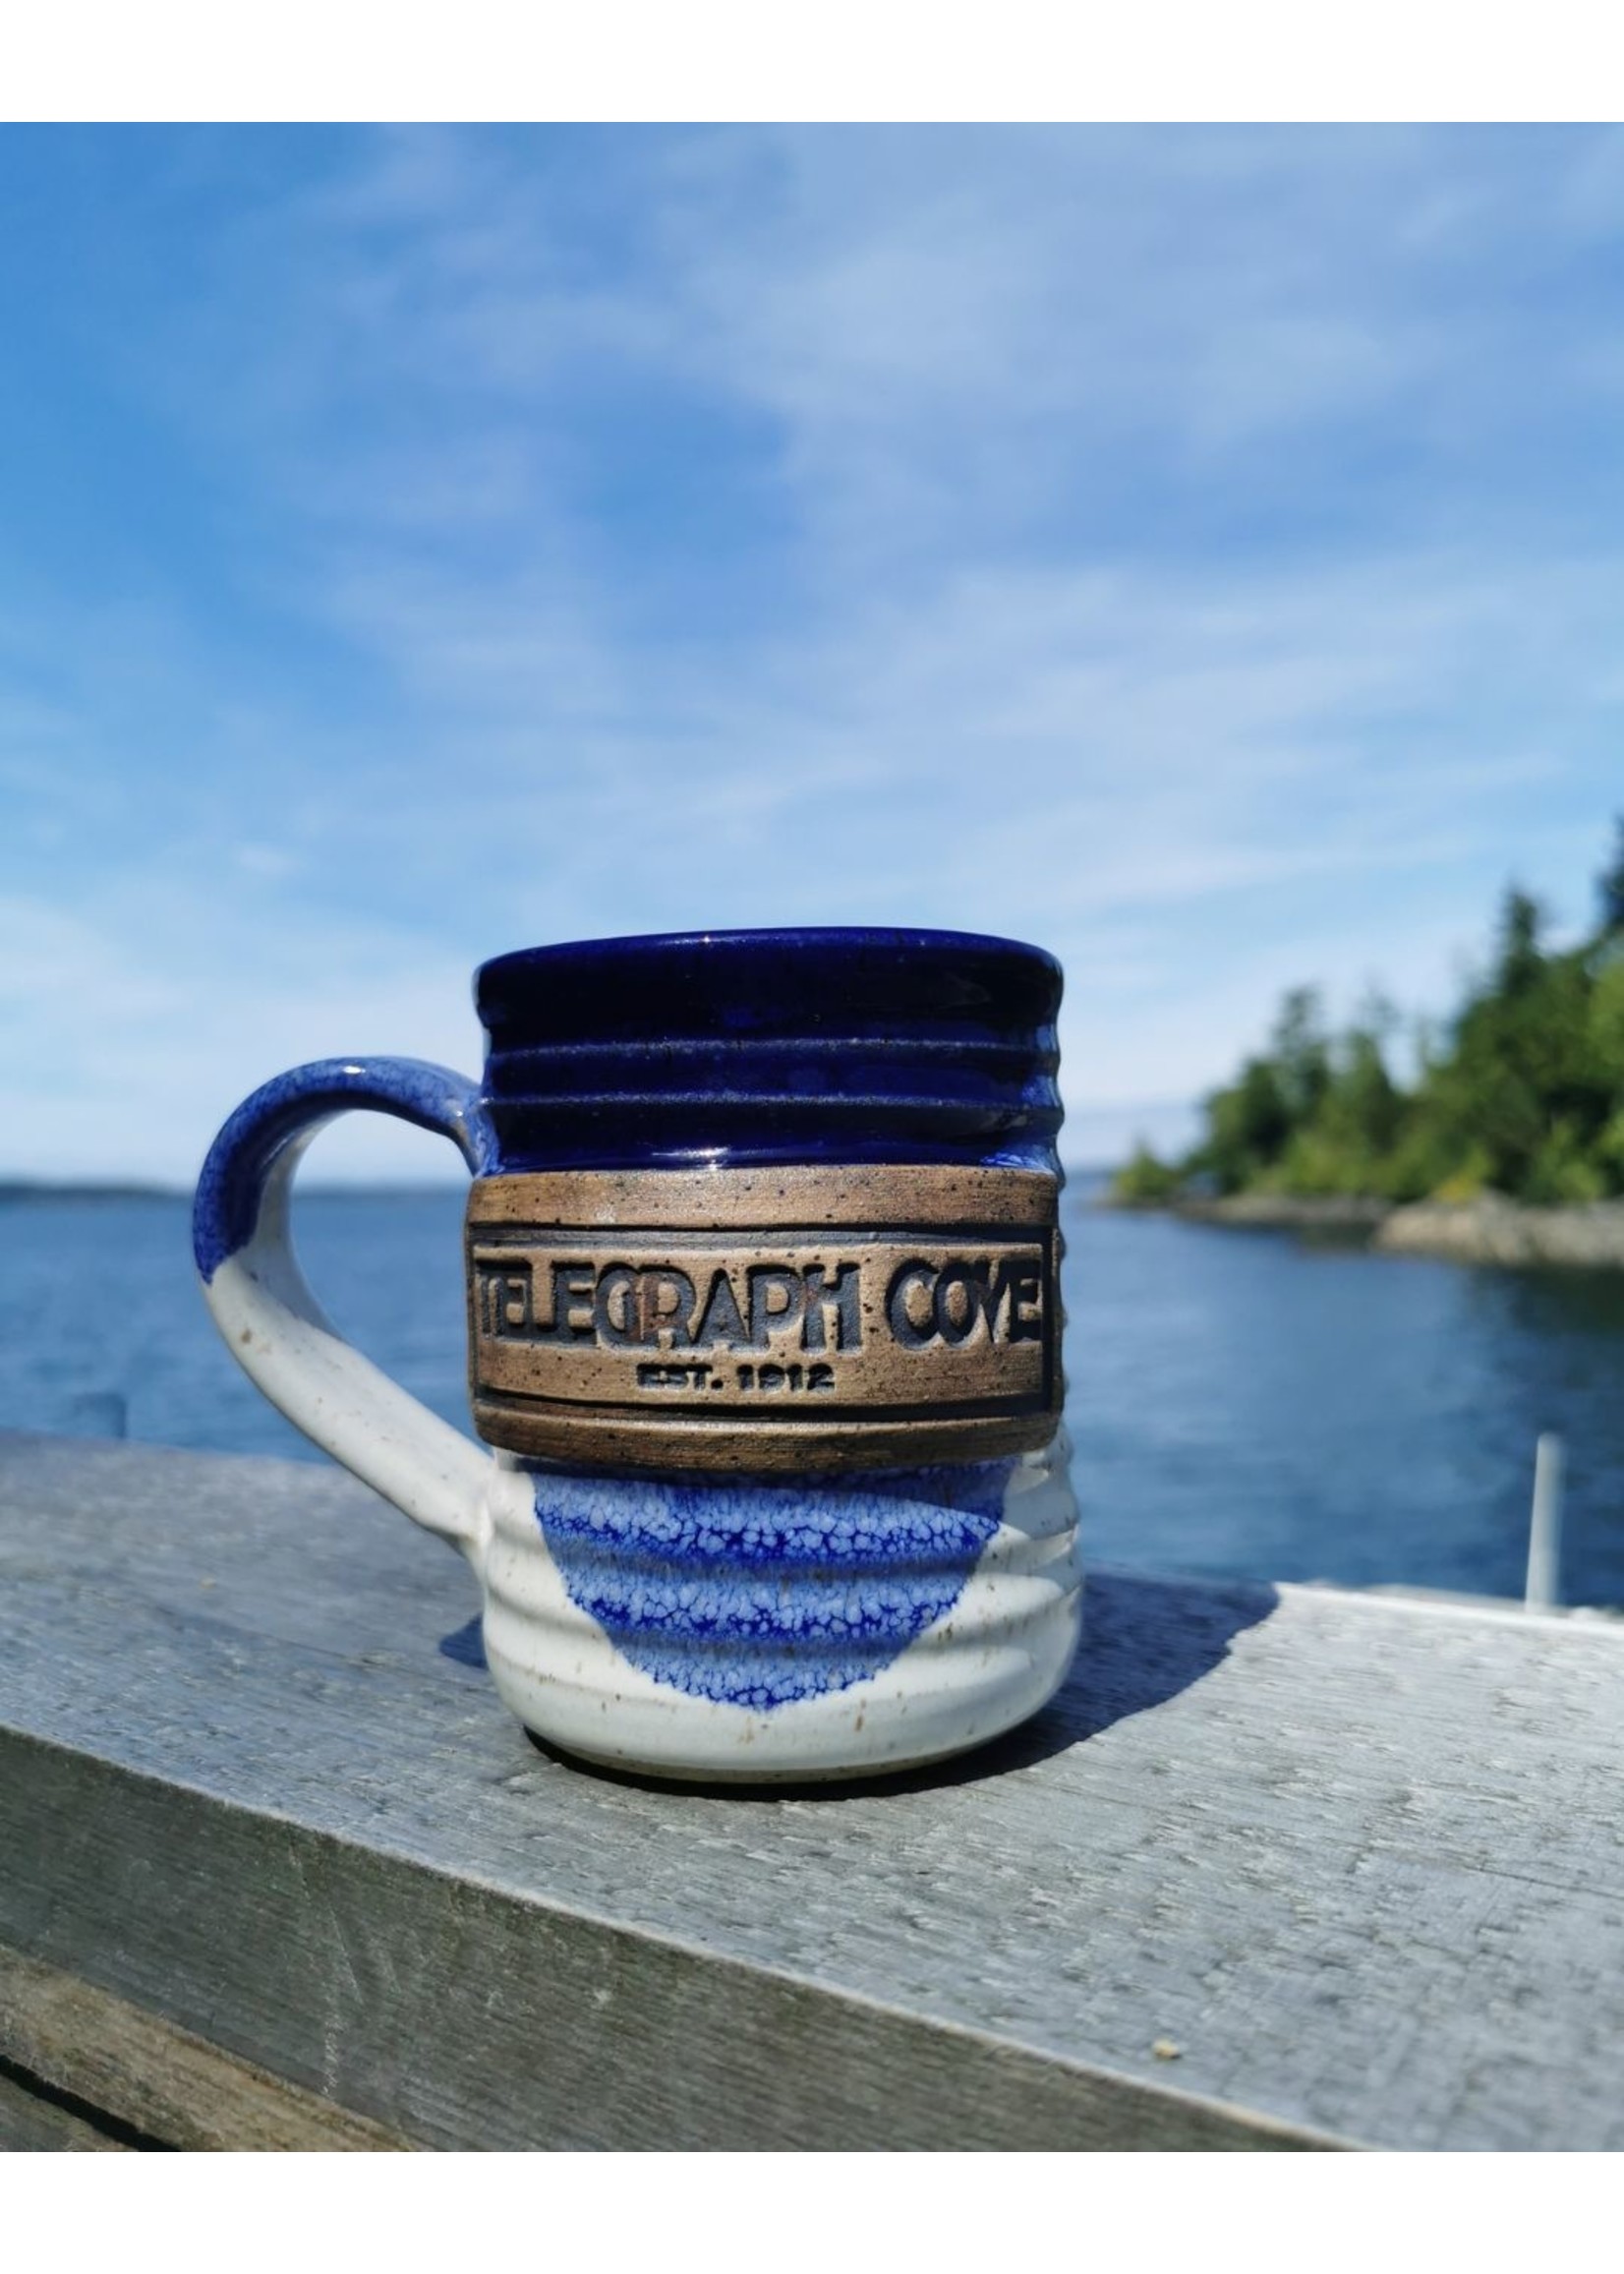 Pottery Mug custom Telegraph Cove